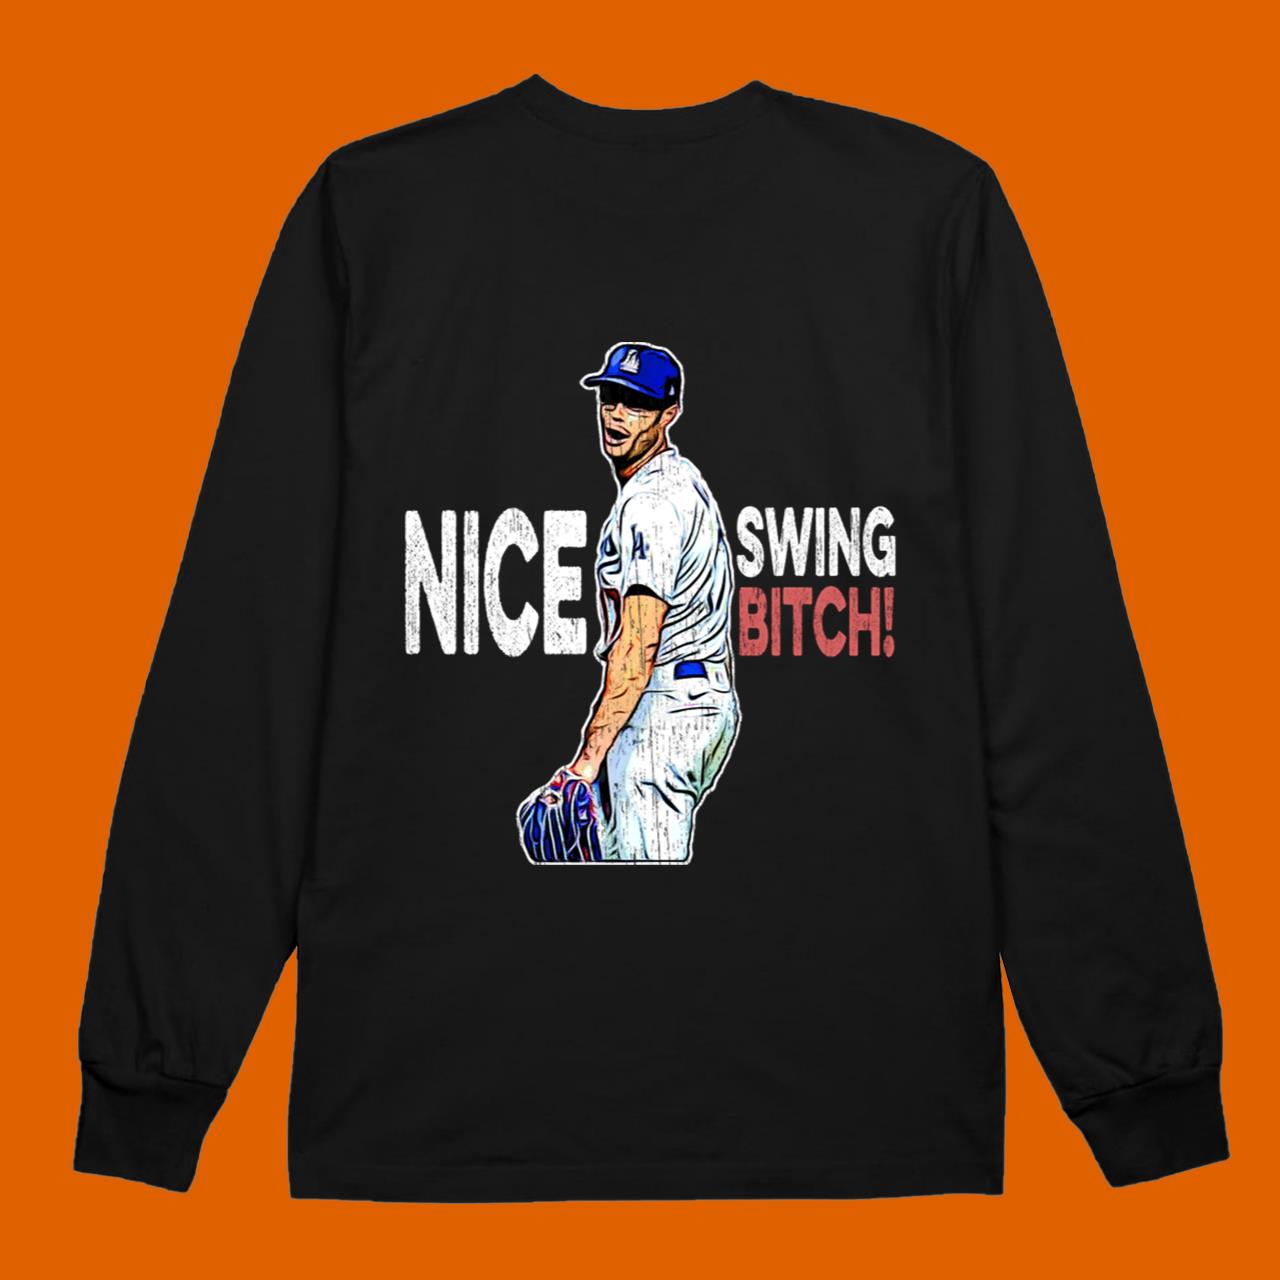 Los Angeles Dodgers Joe Kelly – Nice Swing BItch Funny T-Shirt